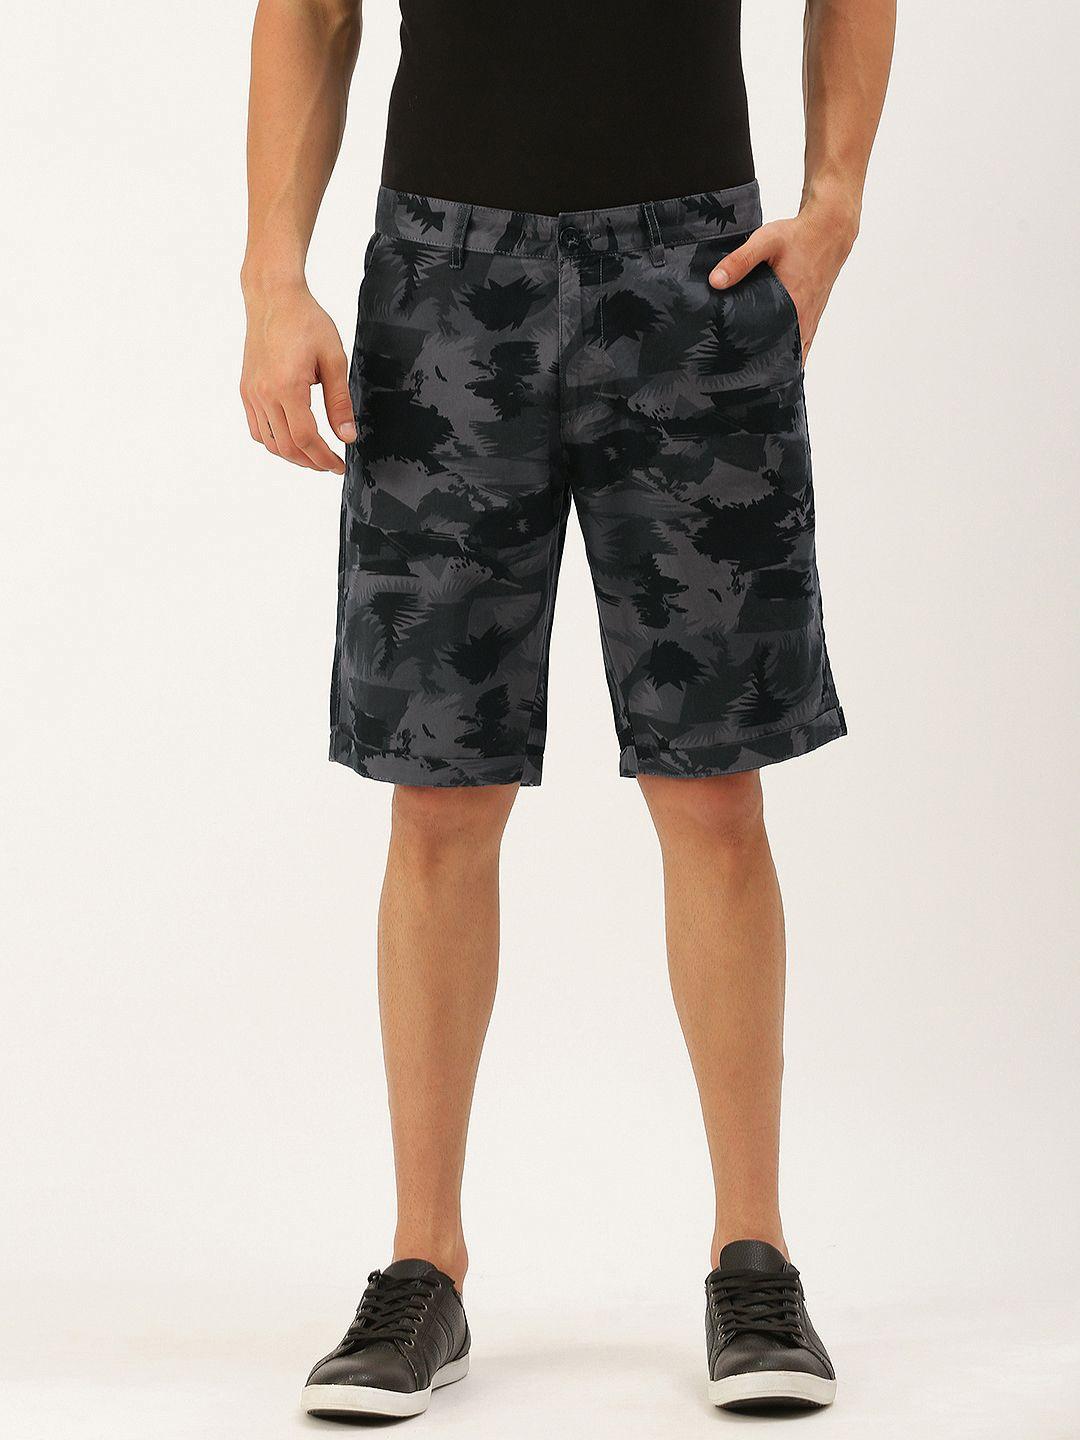 ivoc men grey & black camouflage printed cotton slim fit chino shorts